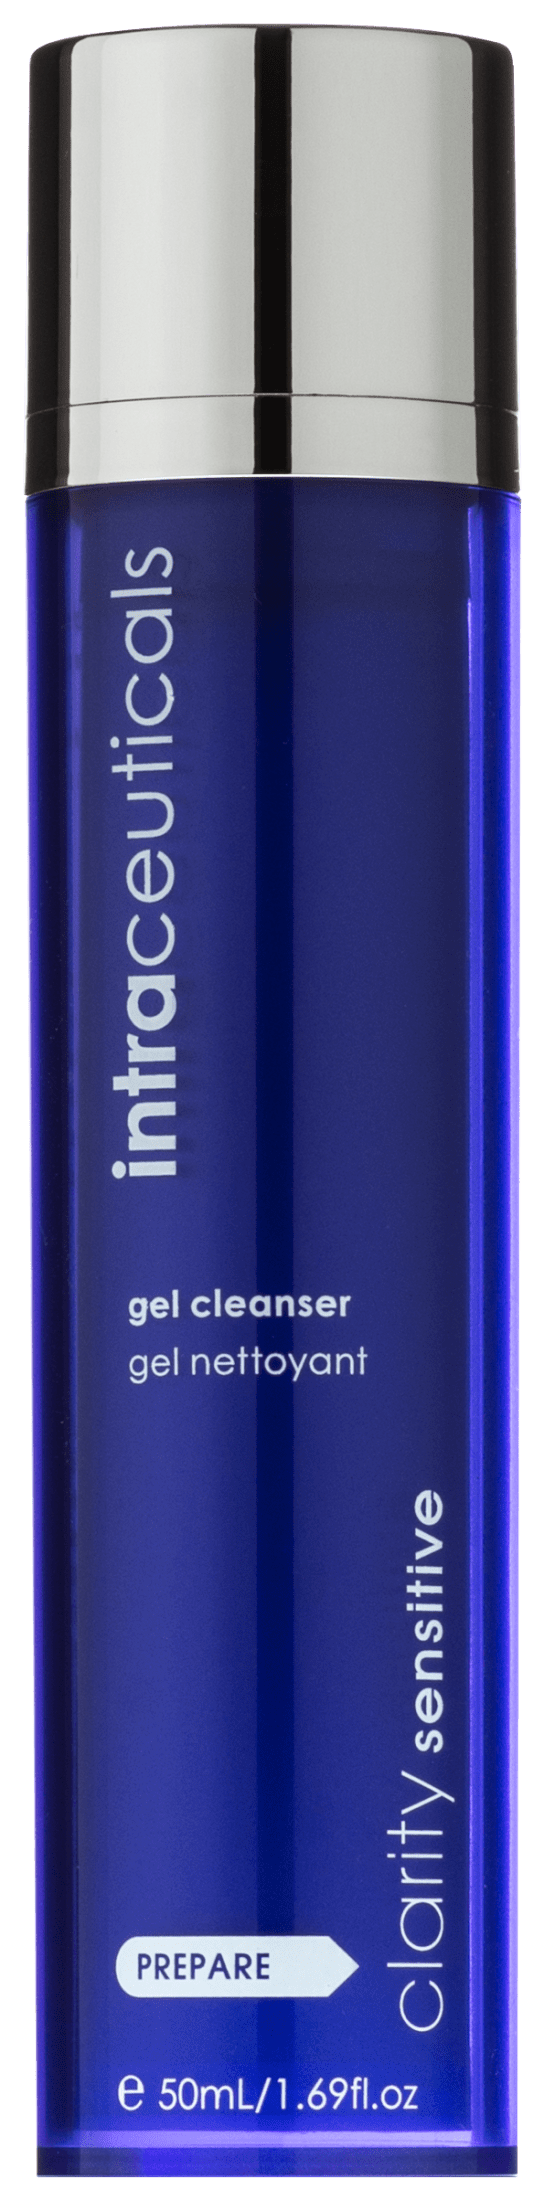 Clarity Sensitive Gel Cleanser